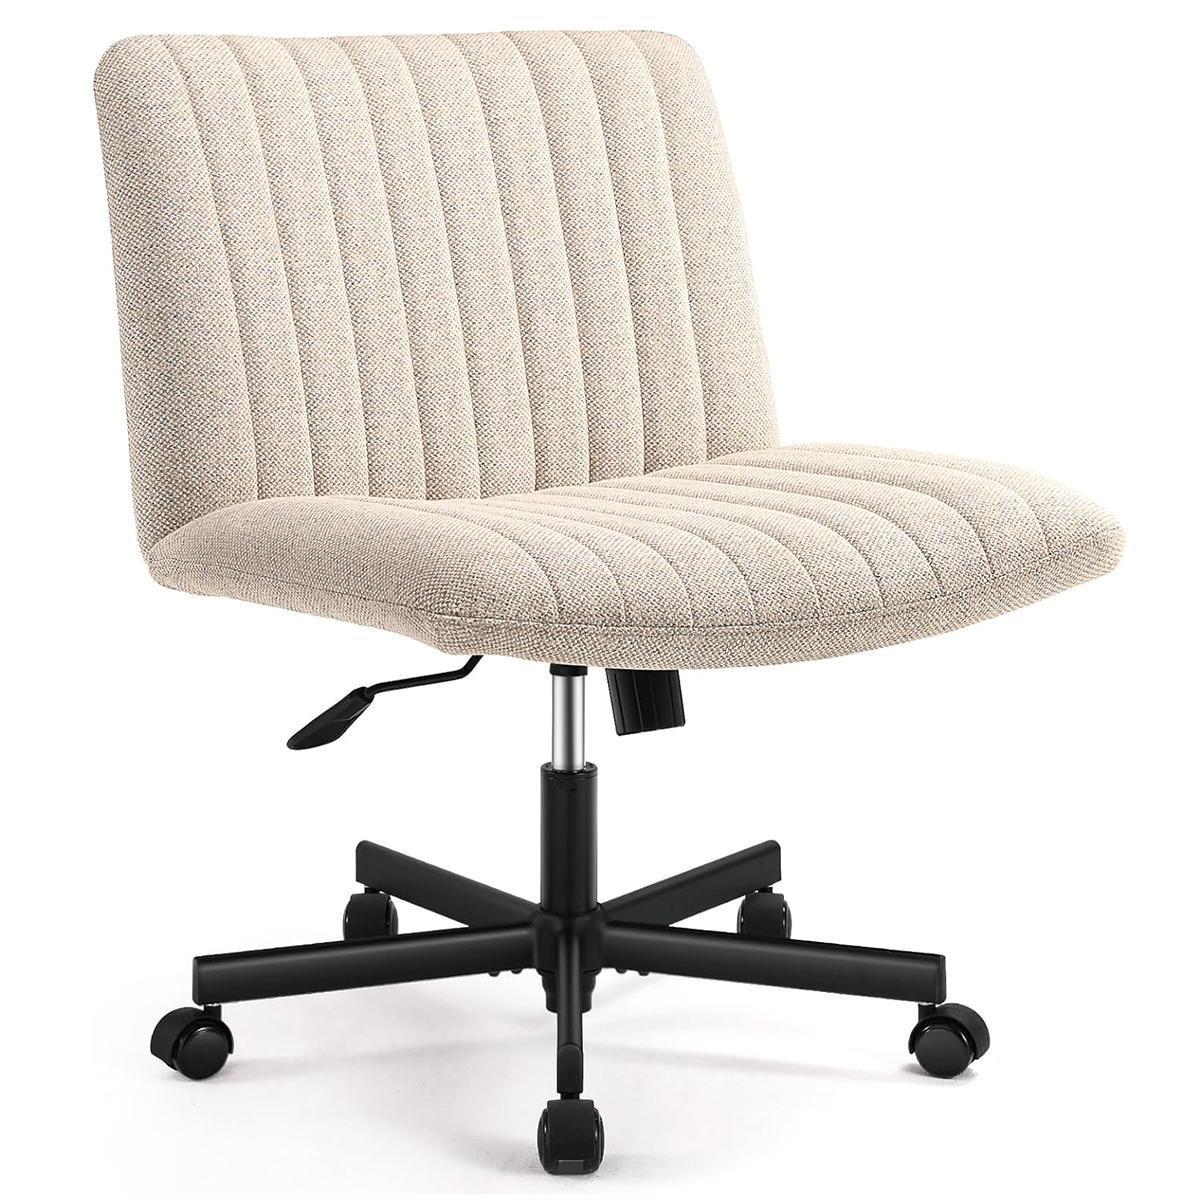 Viral Criss Cross Chair Plus Size Armless Swivel Home beige-fabric